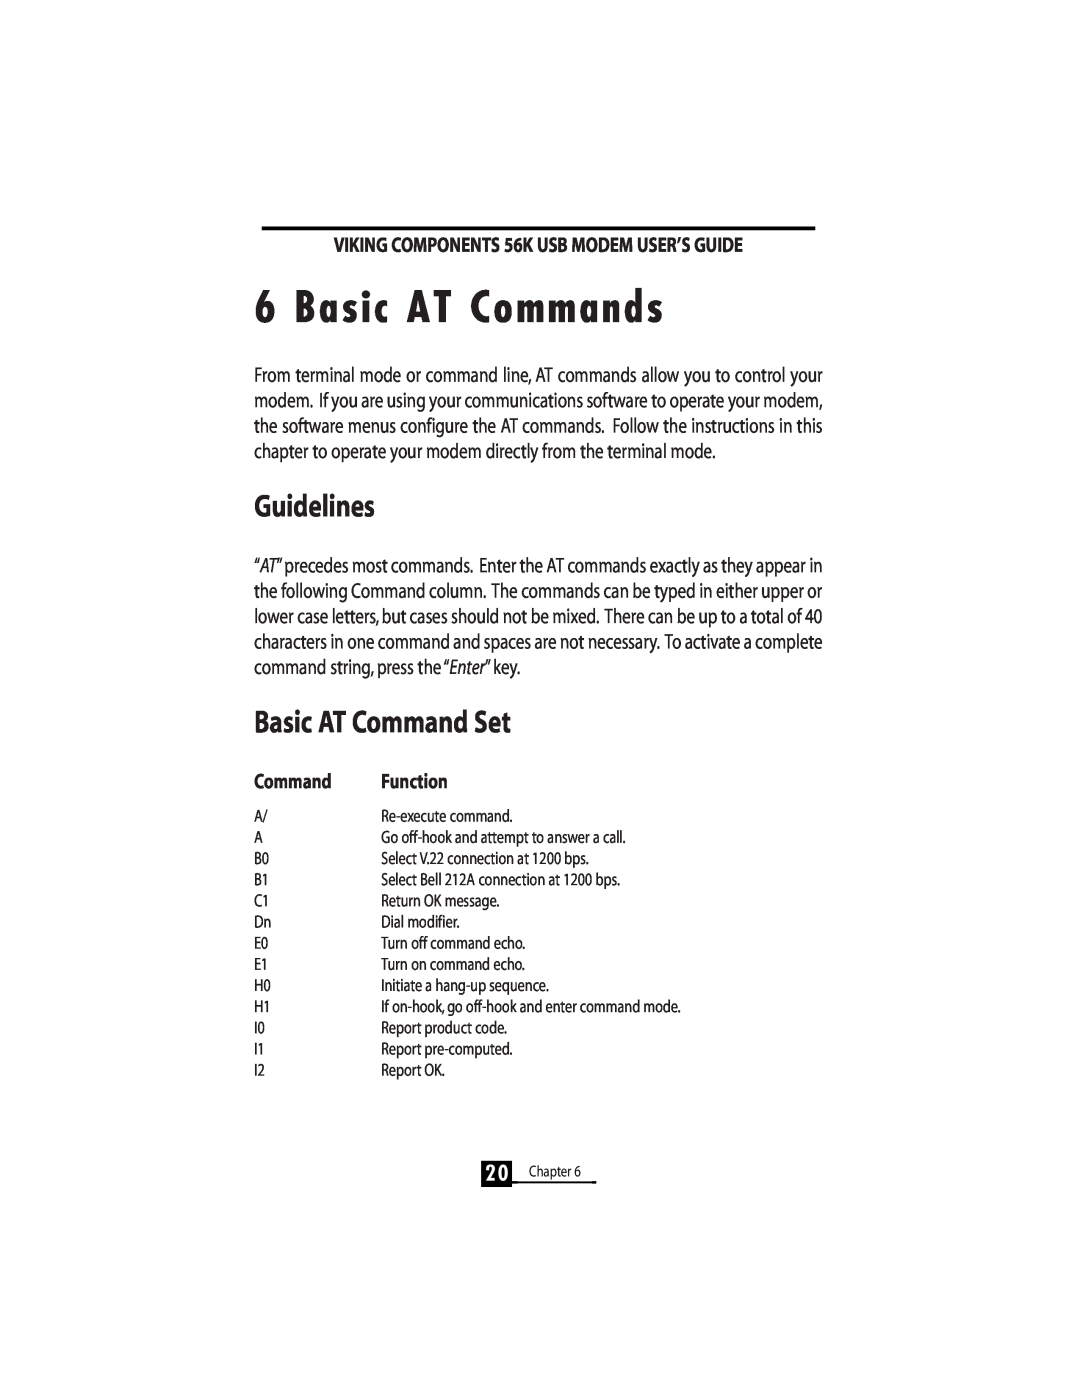 Viking InterWorks 56K manual Basic AT Commands, Guidelines, Basic AT Command Set 